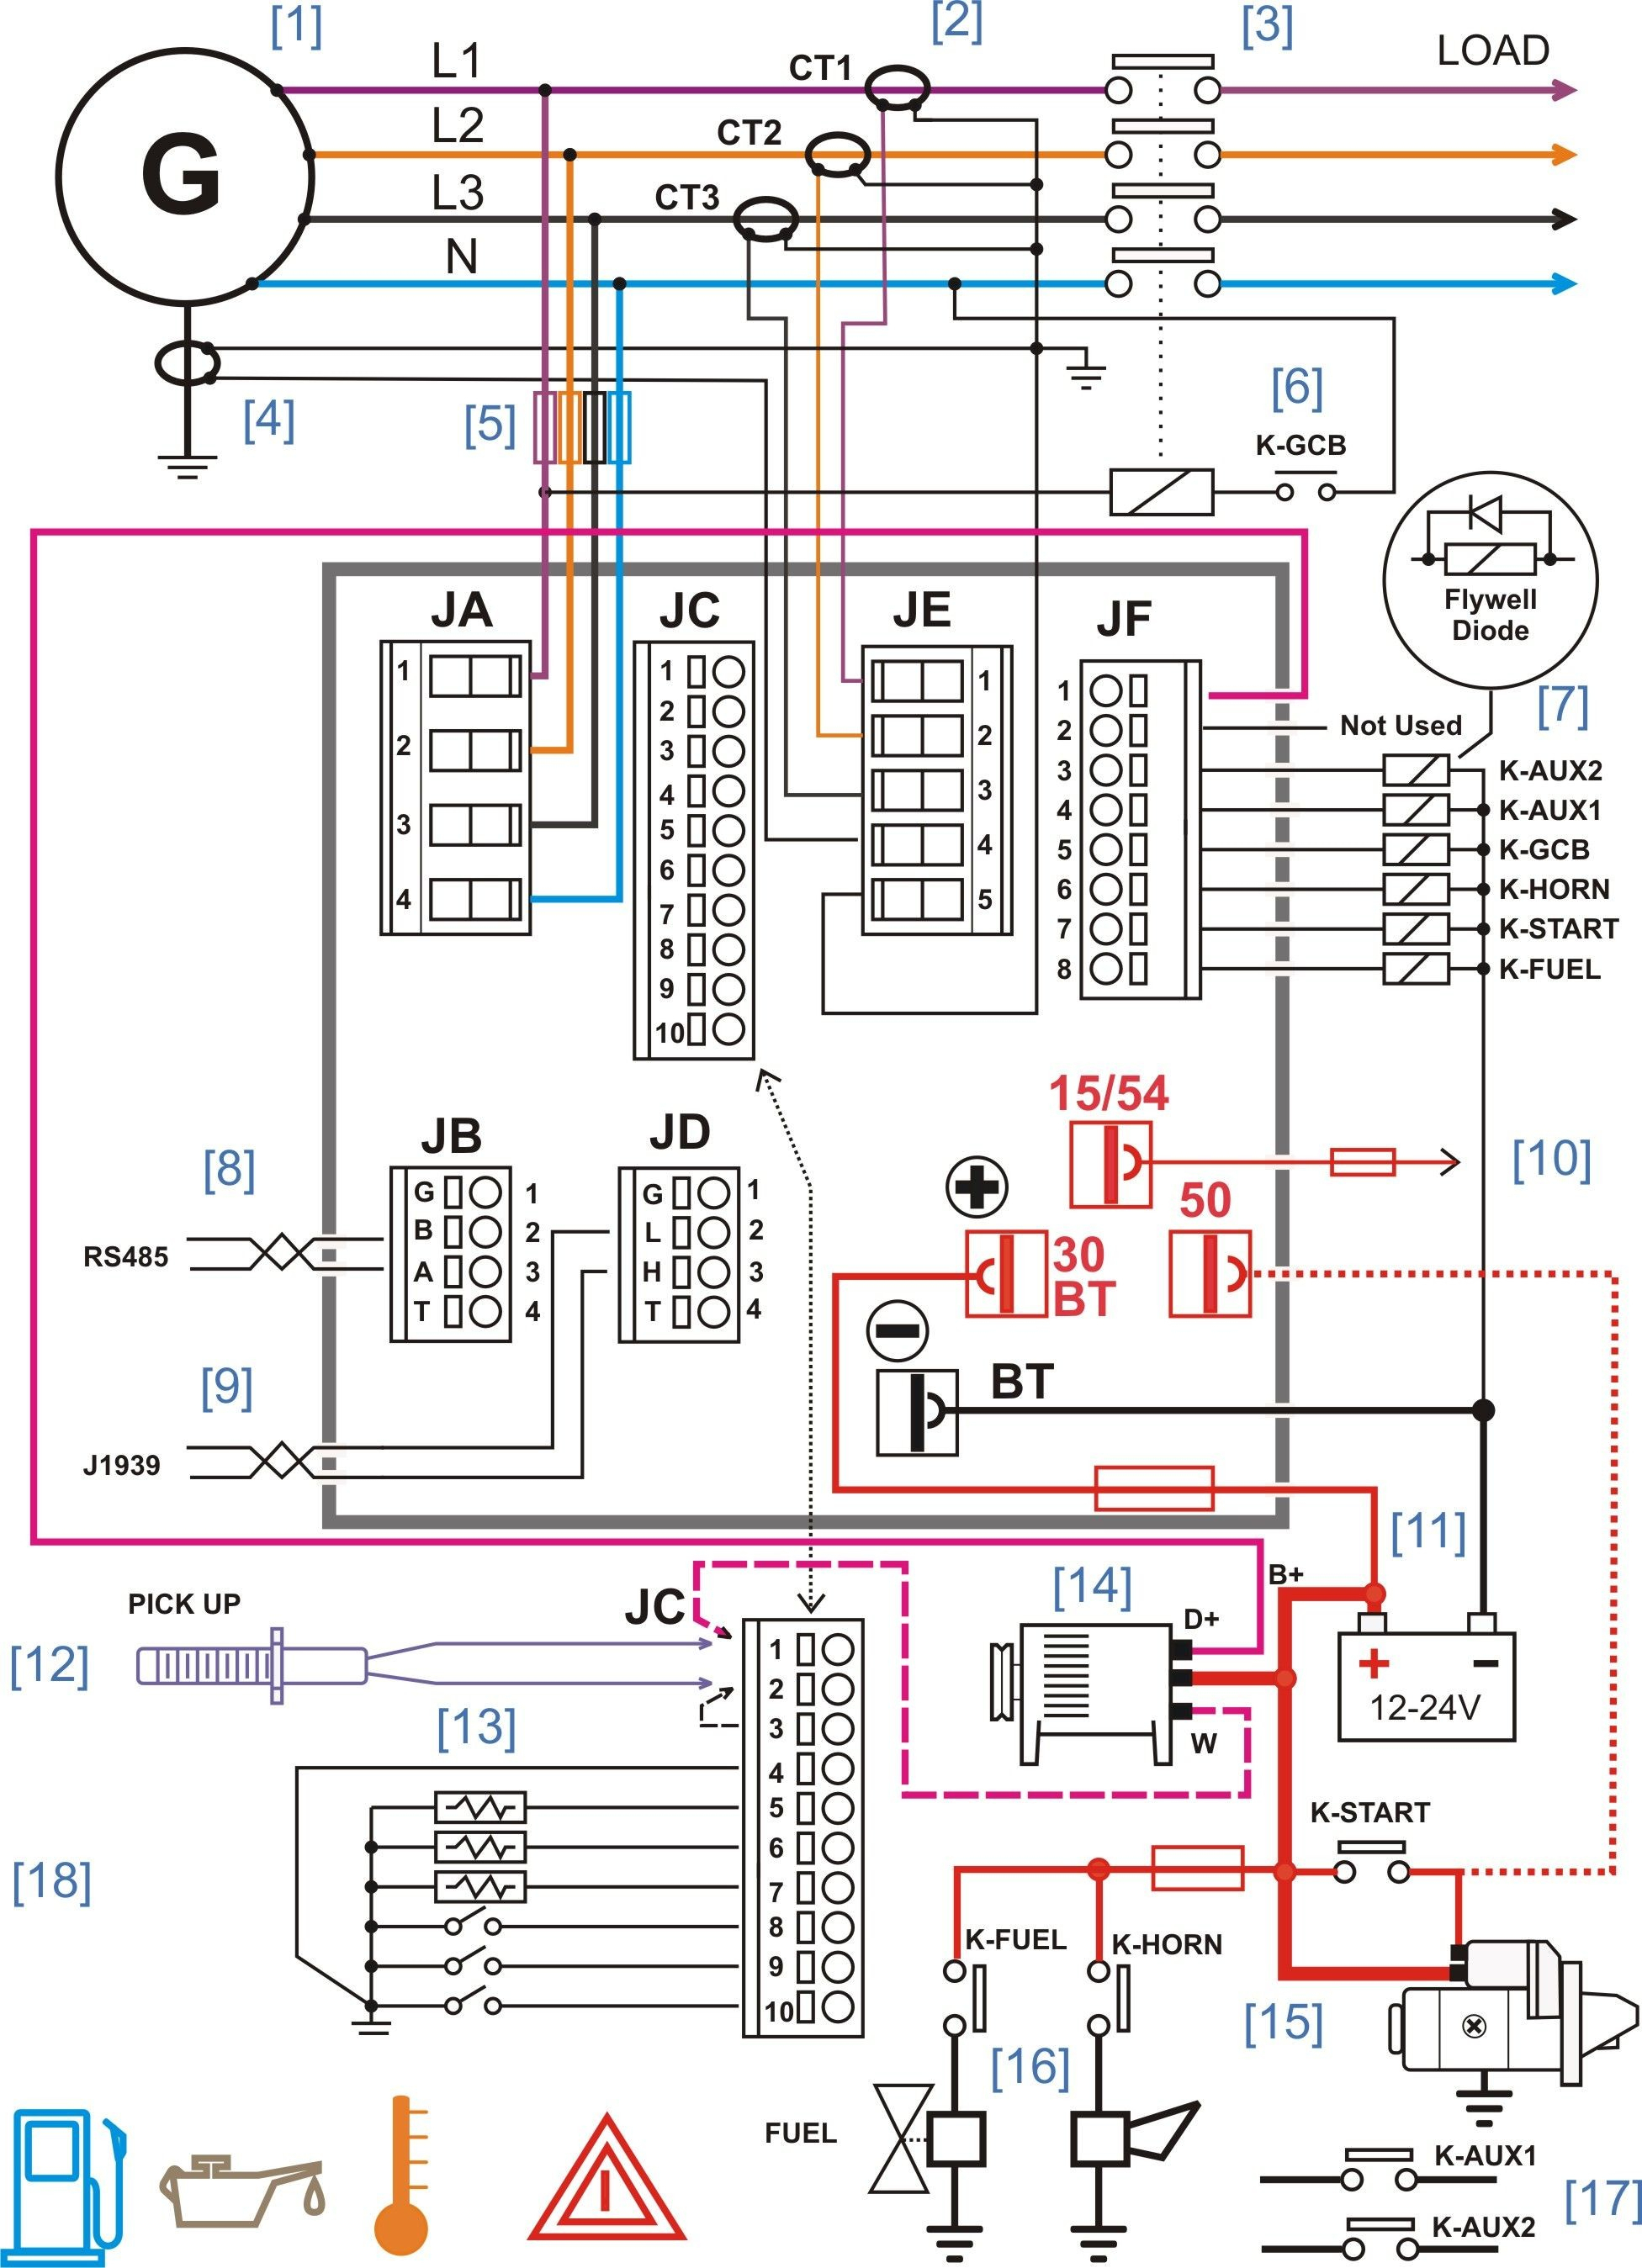 Reliance Transfer Switch Wiring Diagram - Data Wiring Diagram Today - Reliance Generator Transfer Switch Wiring Diagram